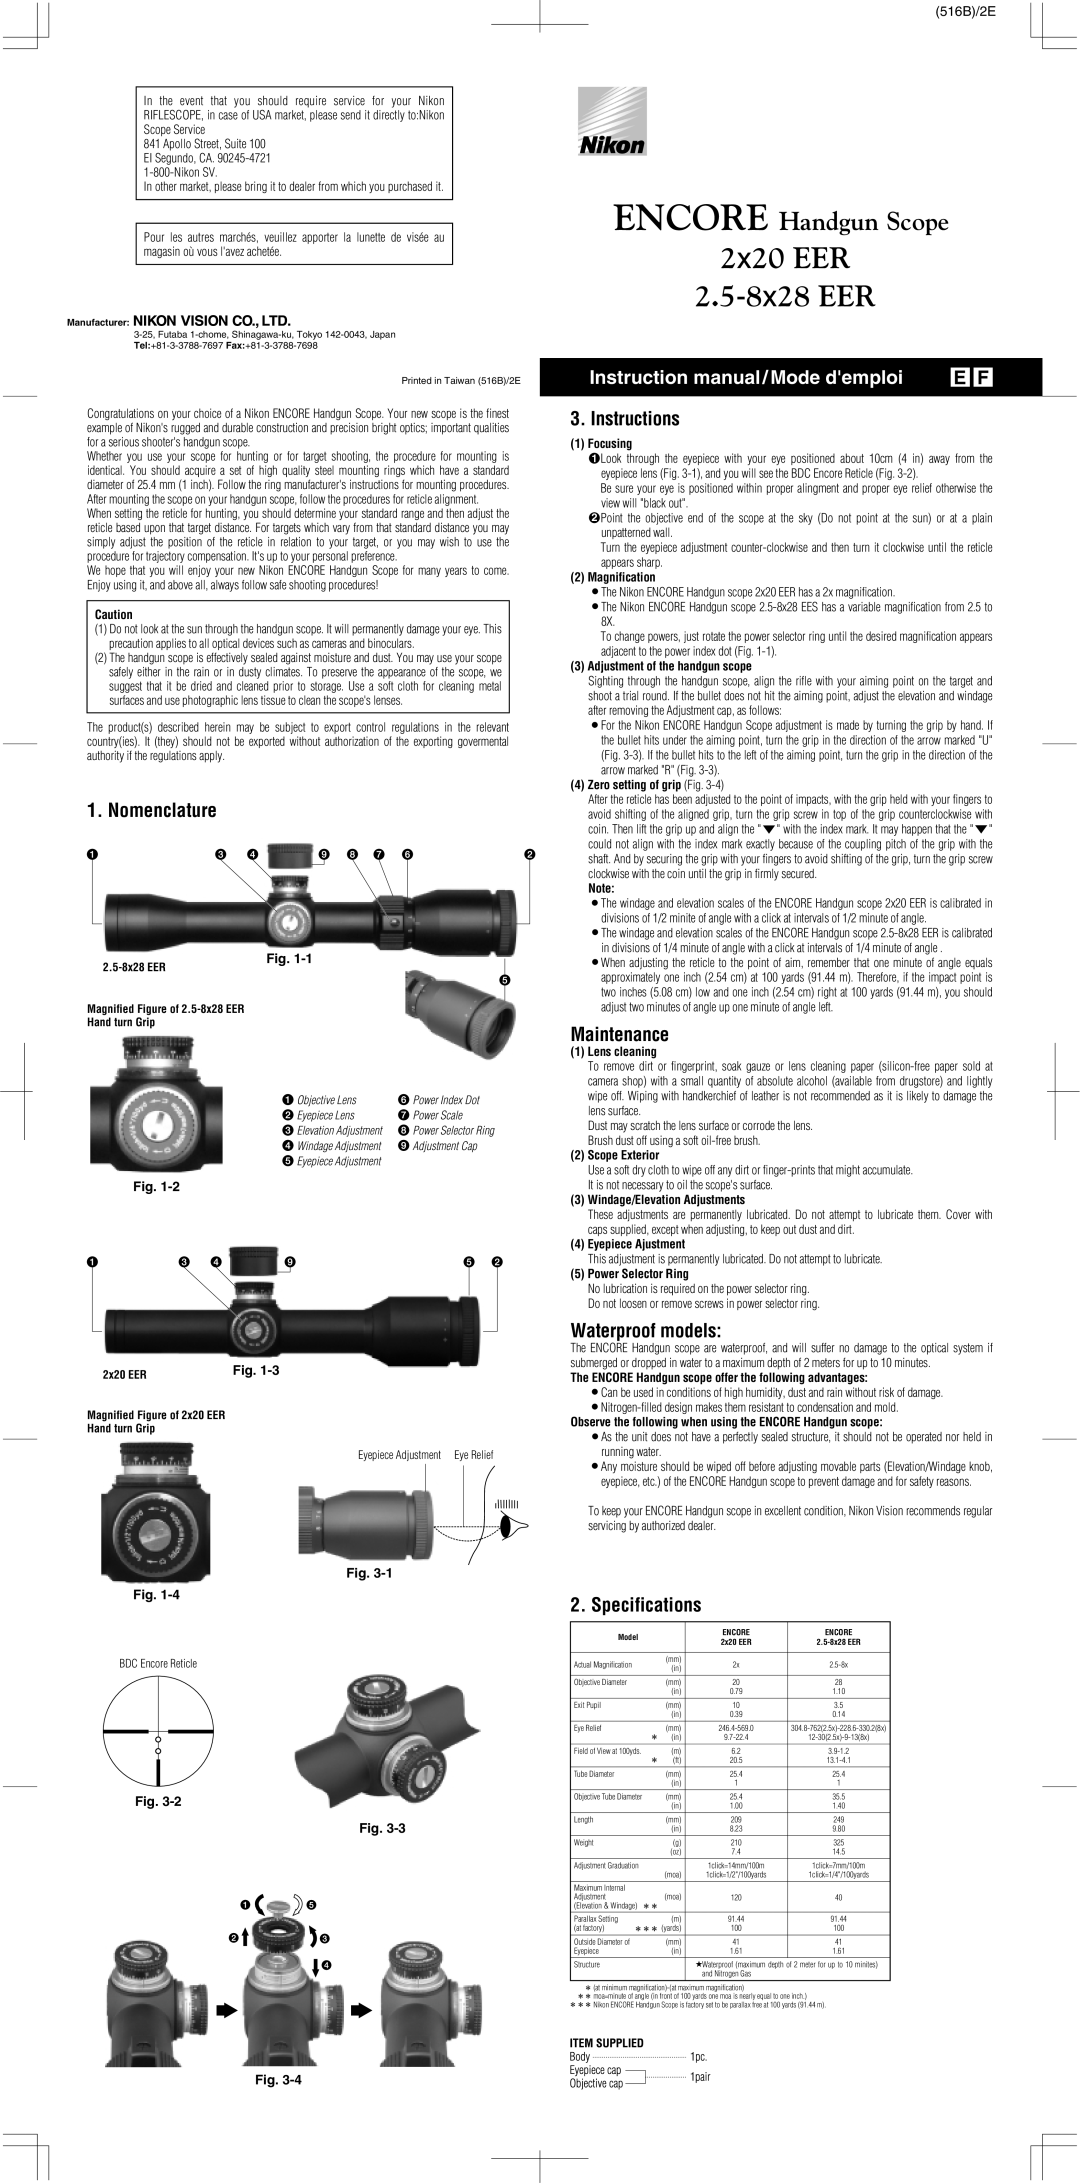 Nikon instruction manual 2x20 EER 2.5-8x28 EER, ENCORE Handgun Scope, Nomenclature, Instructions, Maintenance, 516B/2E 